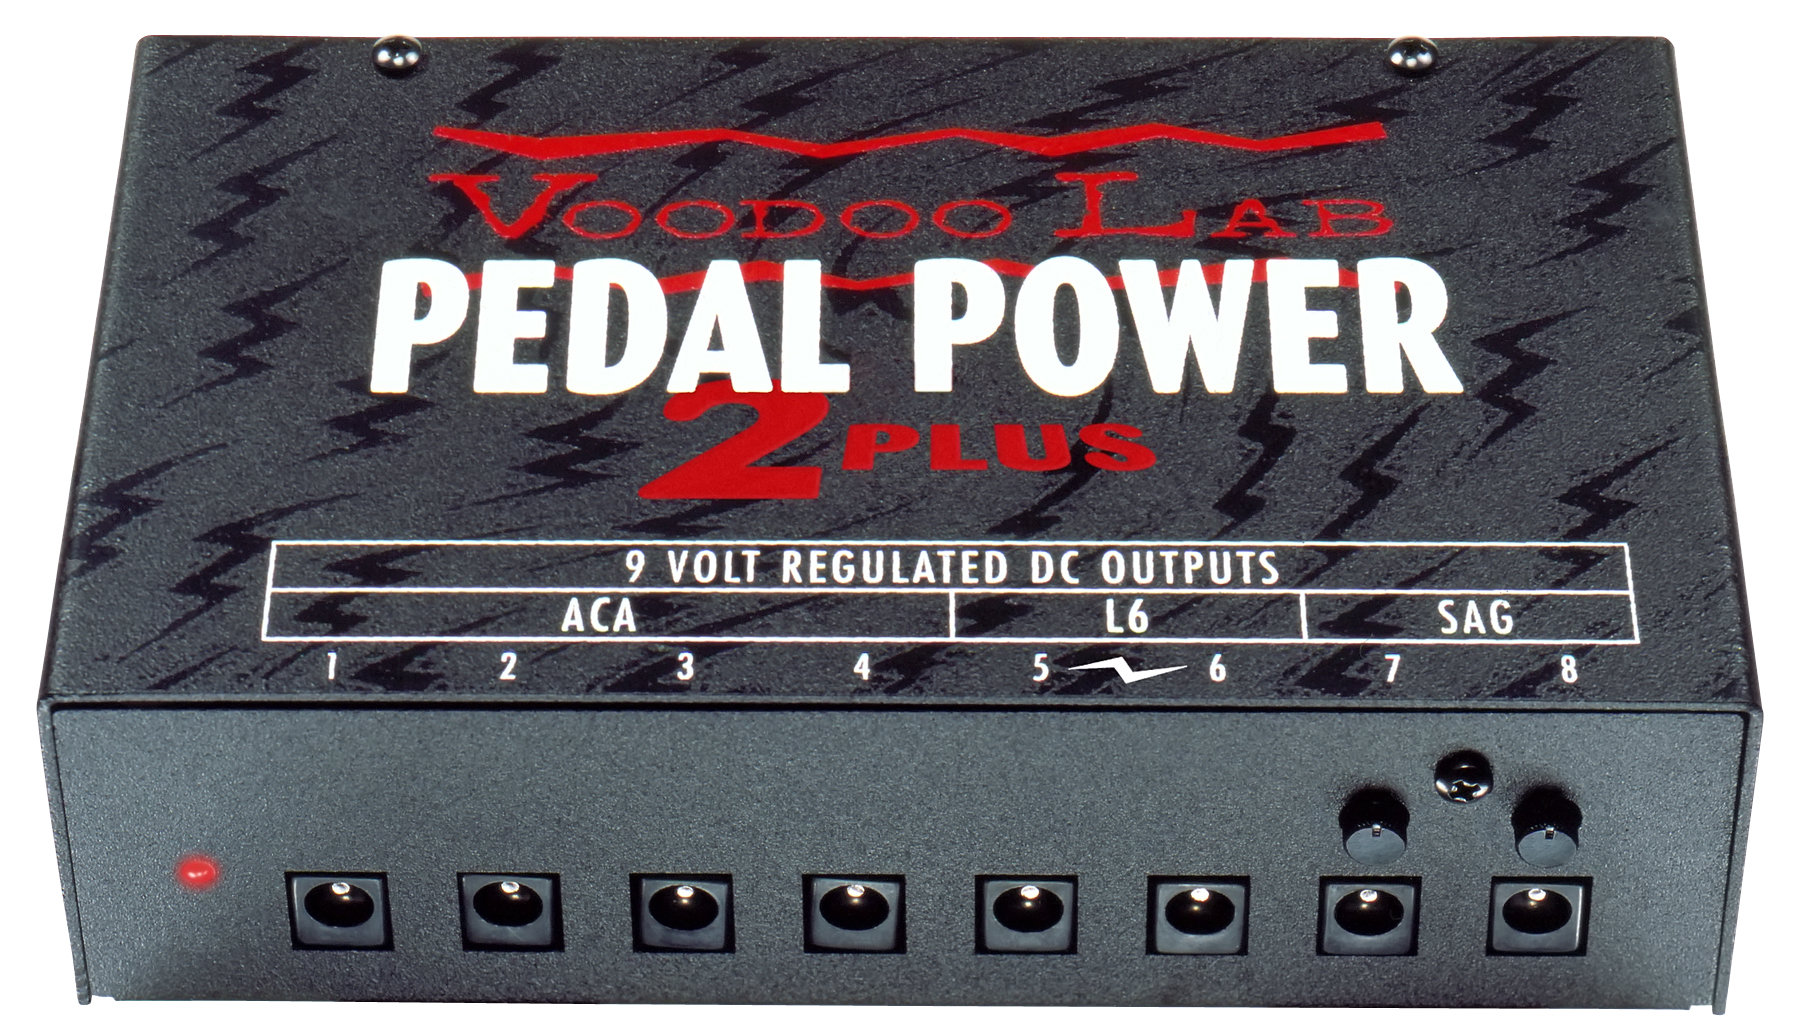 Voodoo Labs Pedal Power 2 Plus power supply